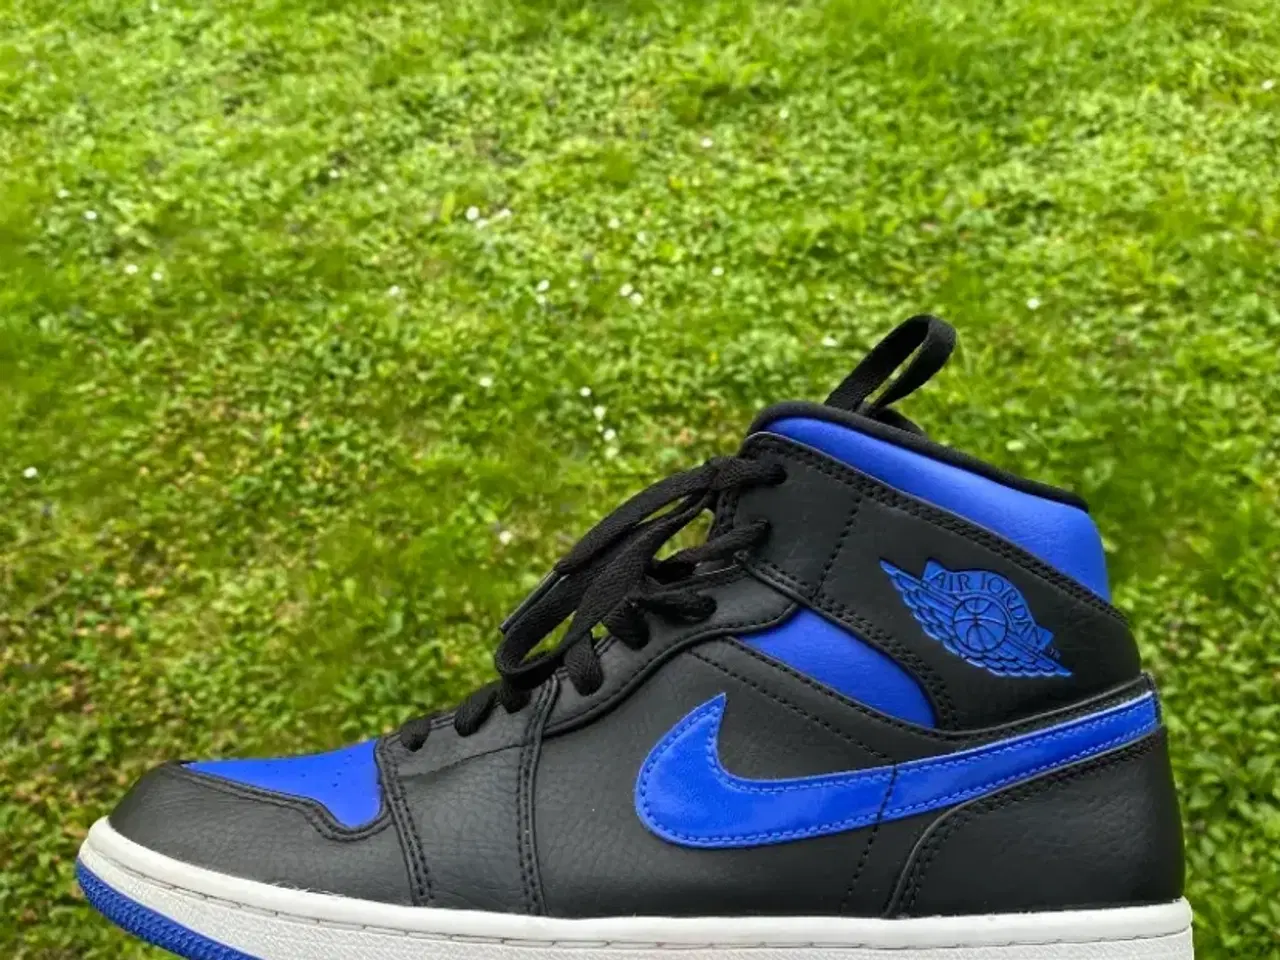 Billede 1 - Jordan 1 royal blue 2020 baksetball sko